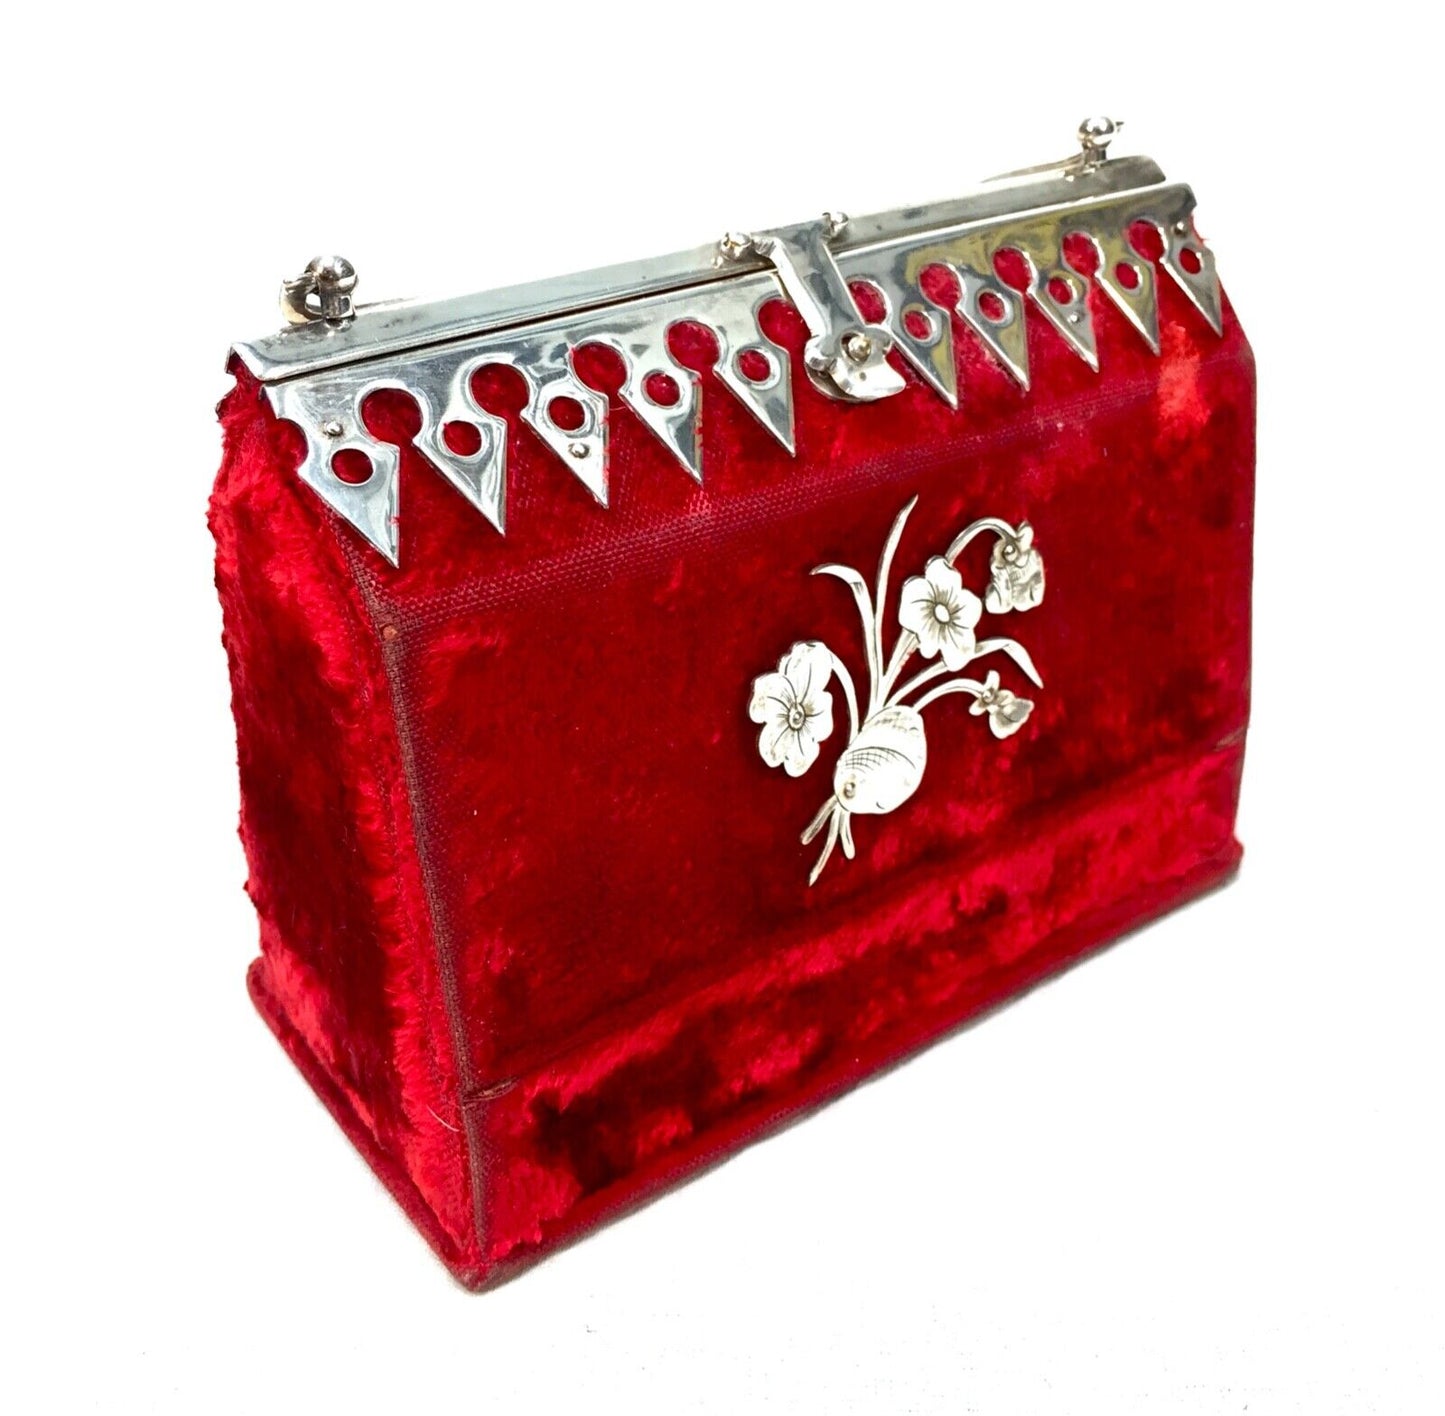 Antique Set of Ladies Cut Glass Perfume Scent Bottles in Handbag Carry Case Box